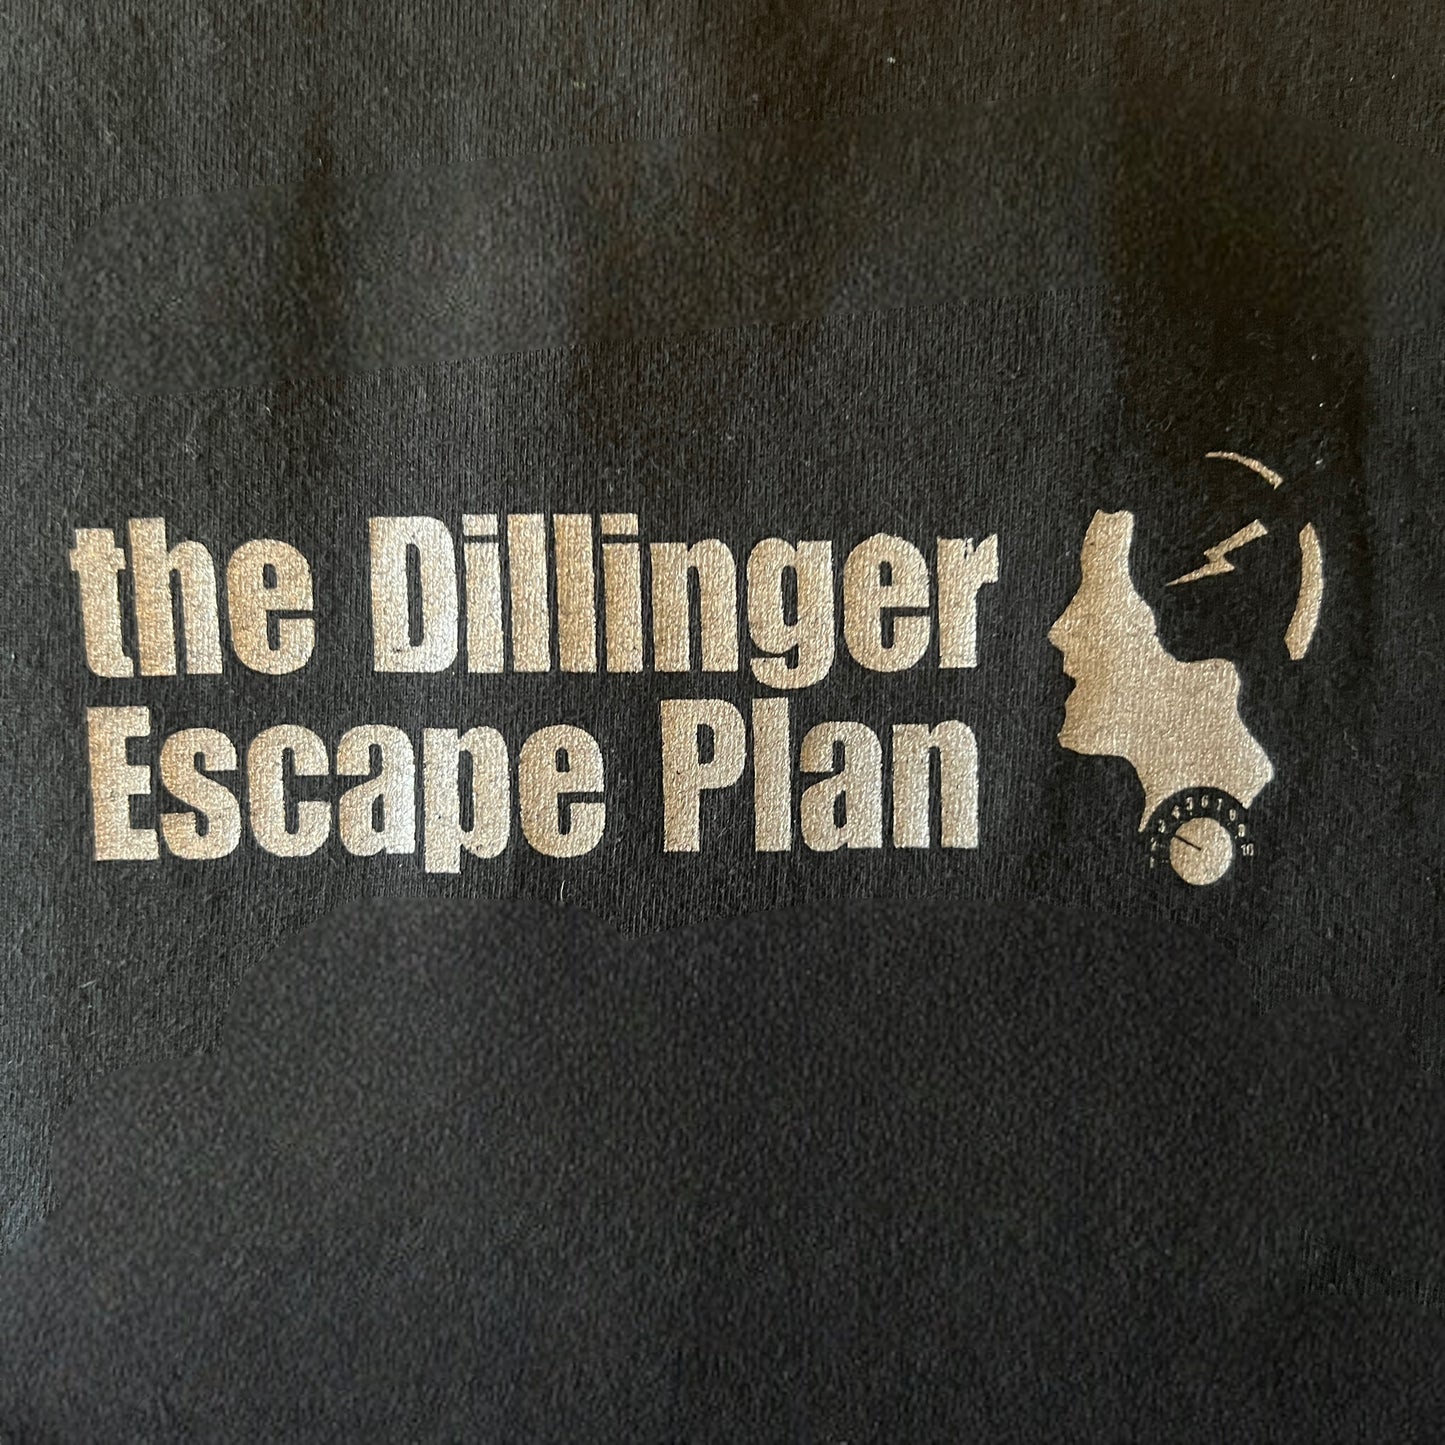 Dillinger Escape Plan Under The Running Board Vintage Band T-Shirt Size L